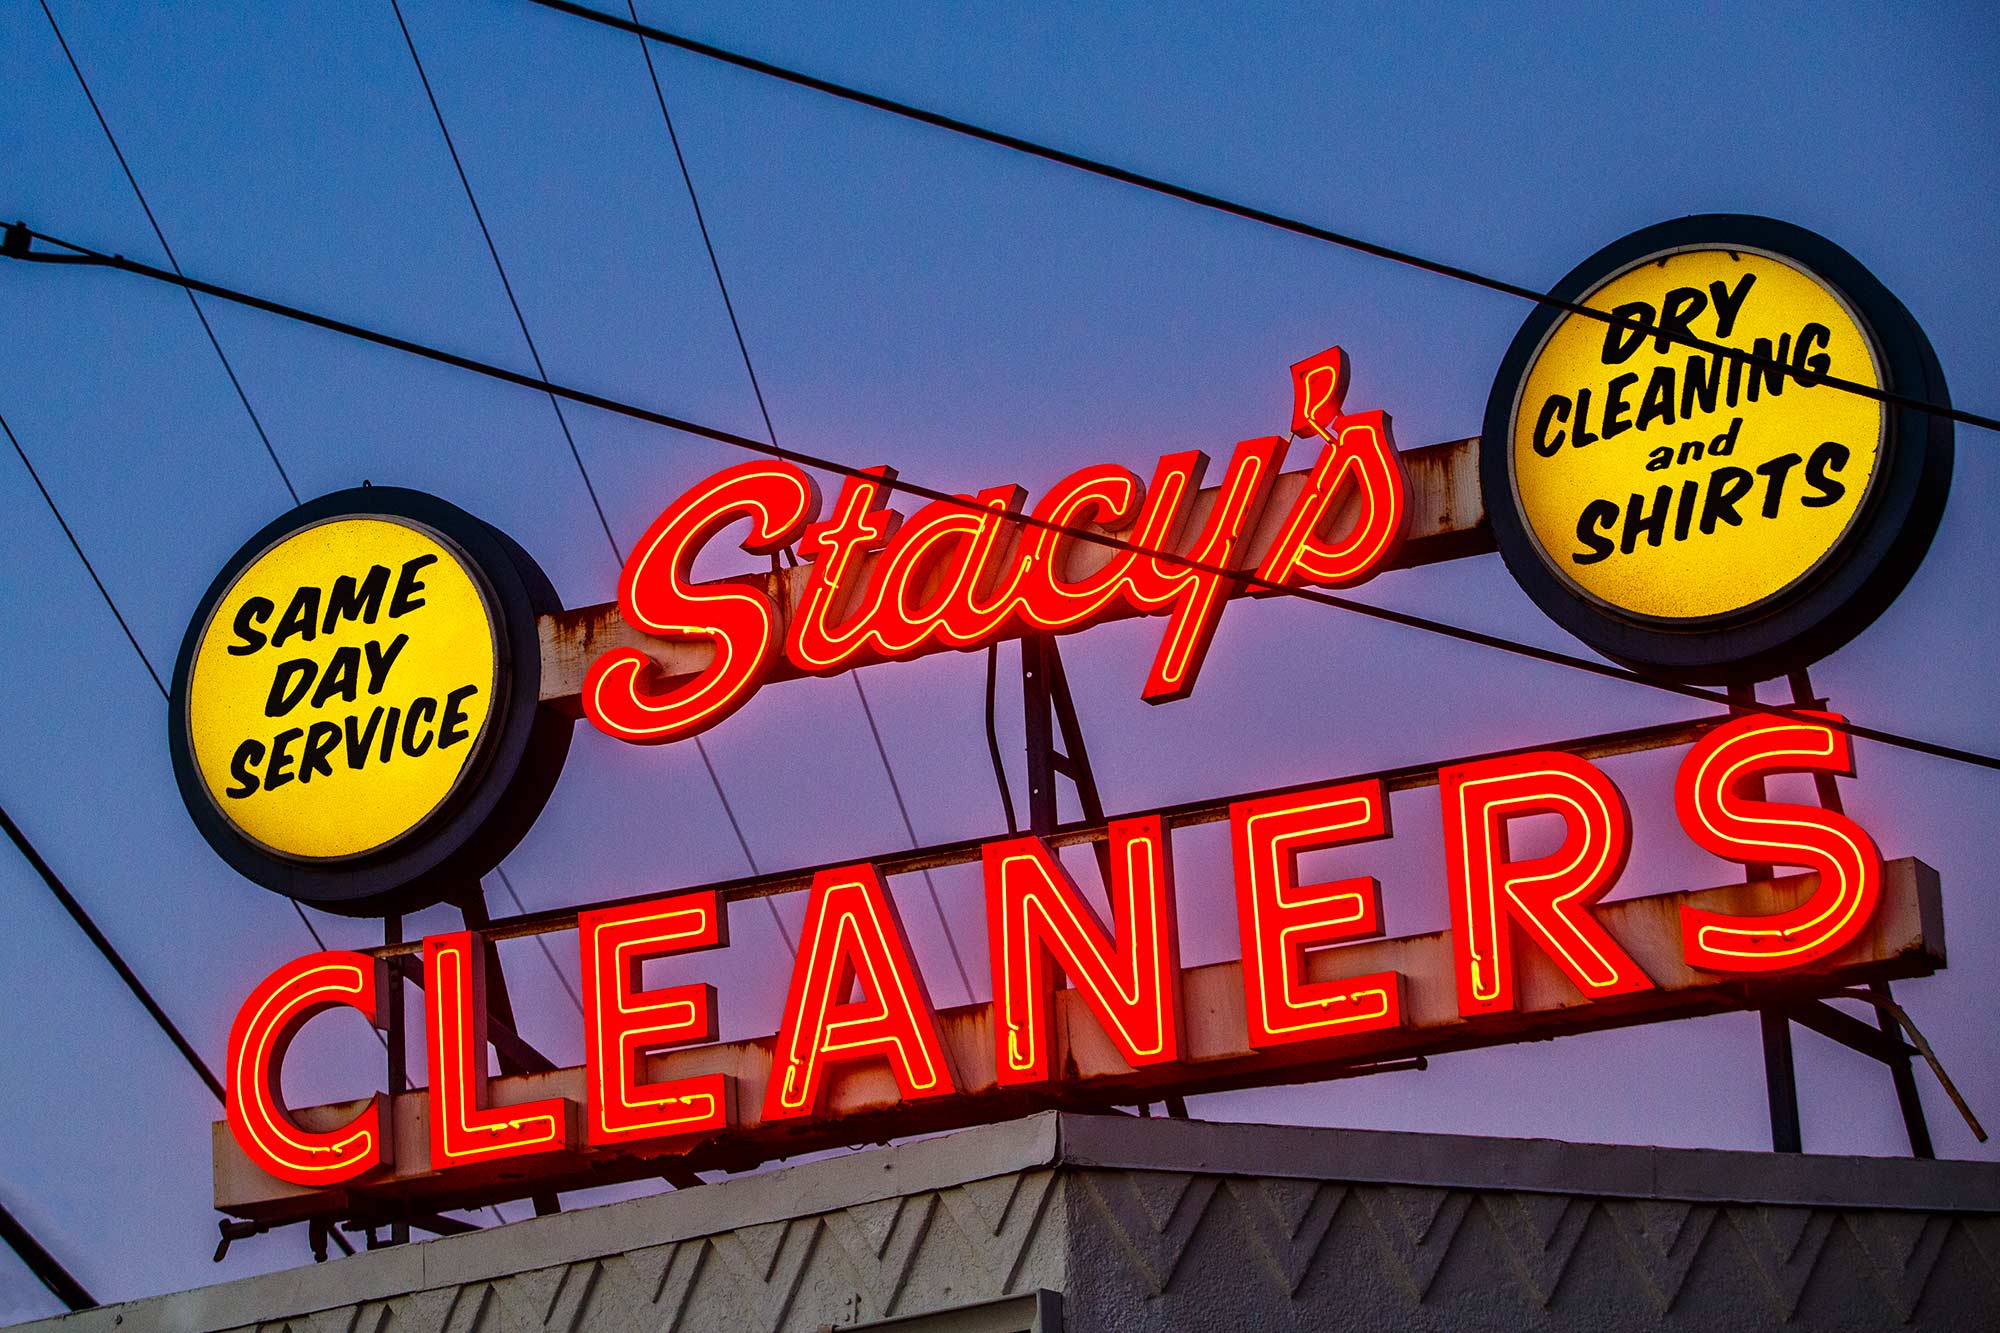 Stacy's Cleaners, East Longmeadow, MA - 11/16